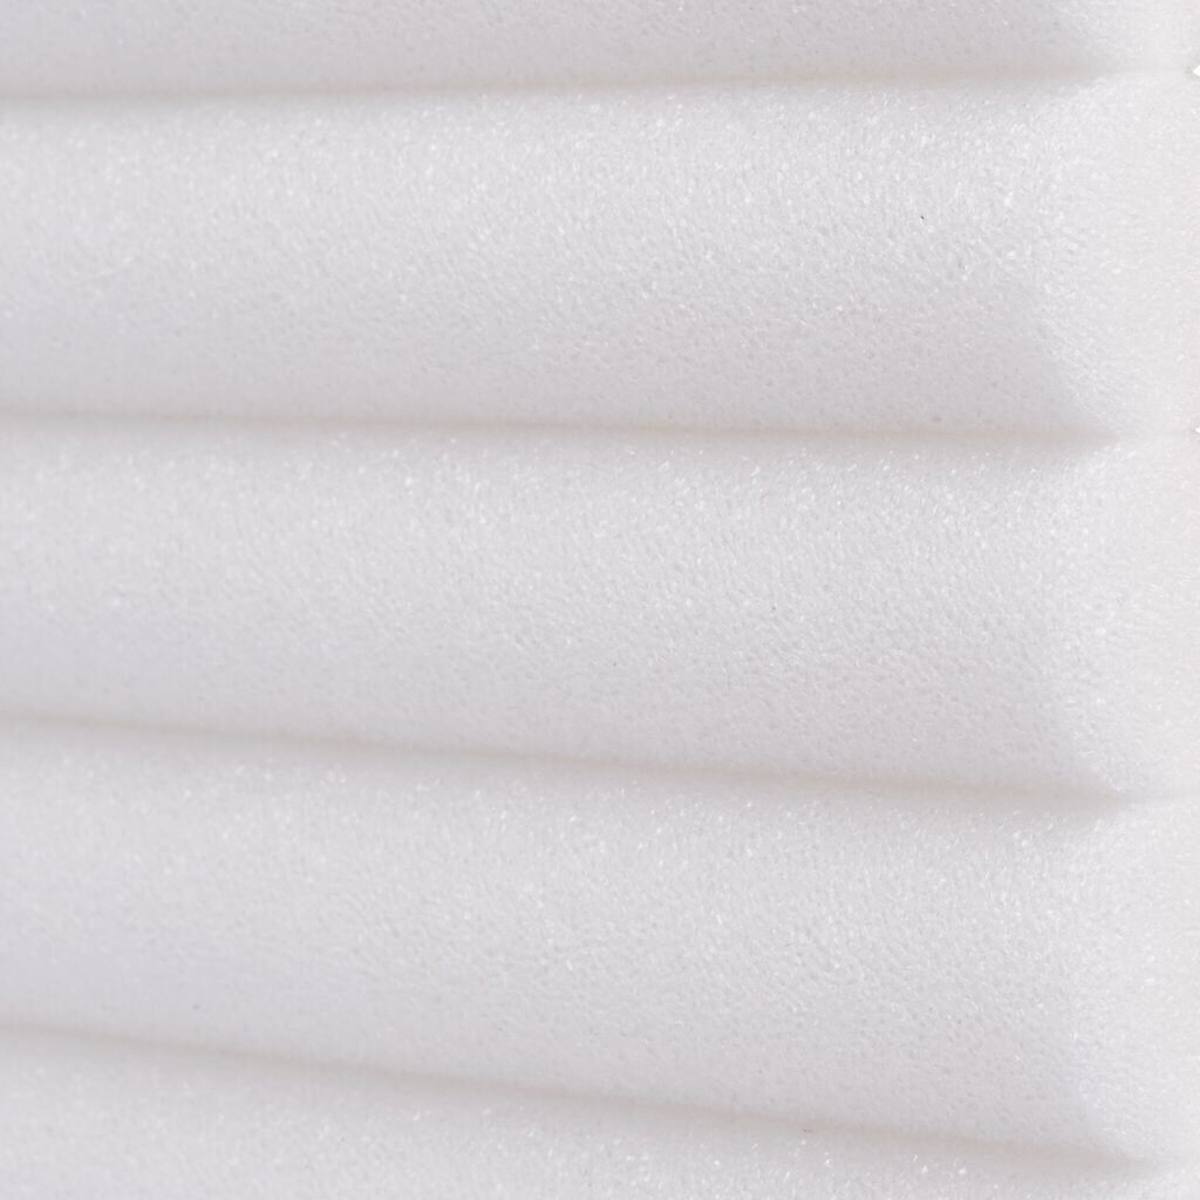 Nastro adesivo 3M Soft Edge Foam, bianco, 13 mm x 50 m, 09678